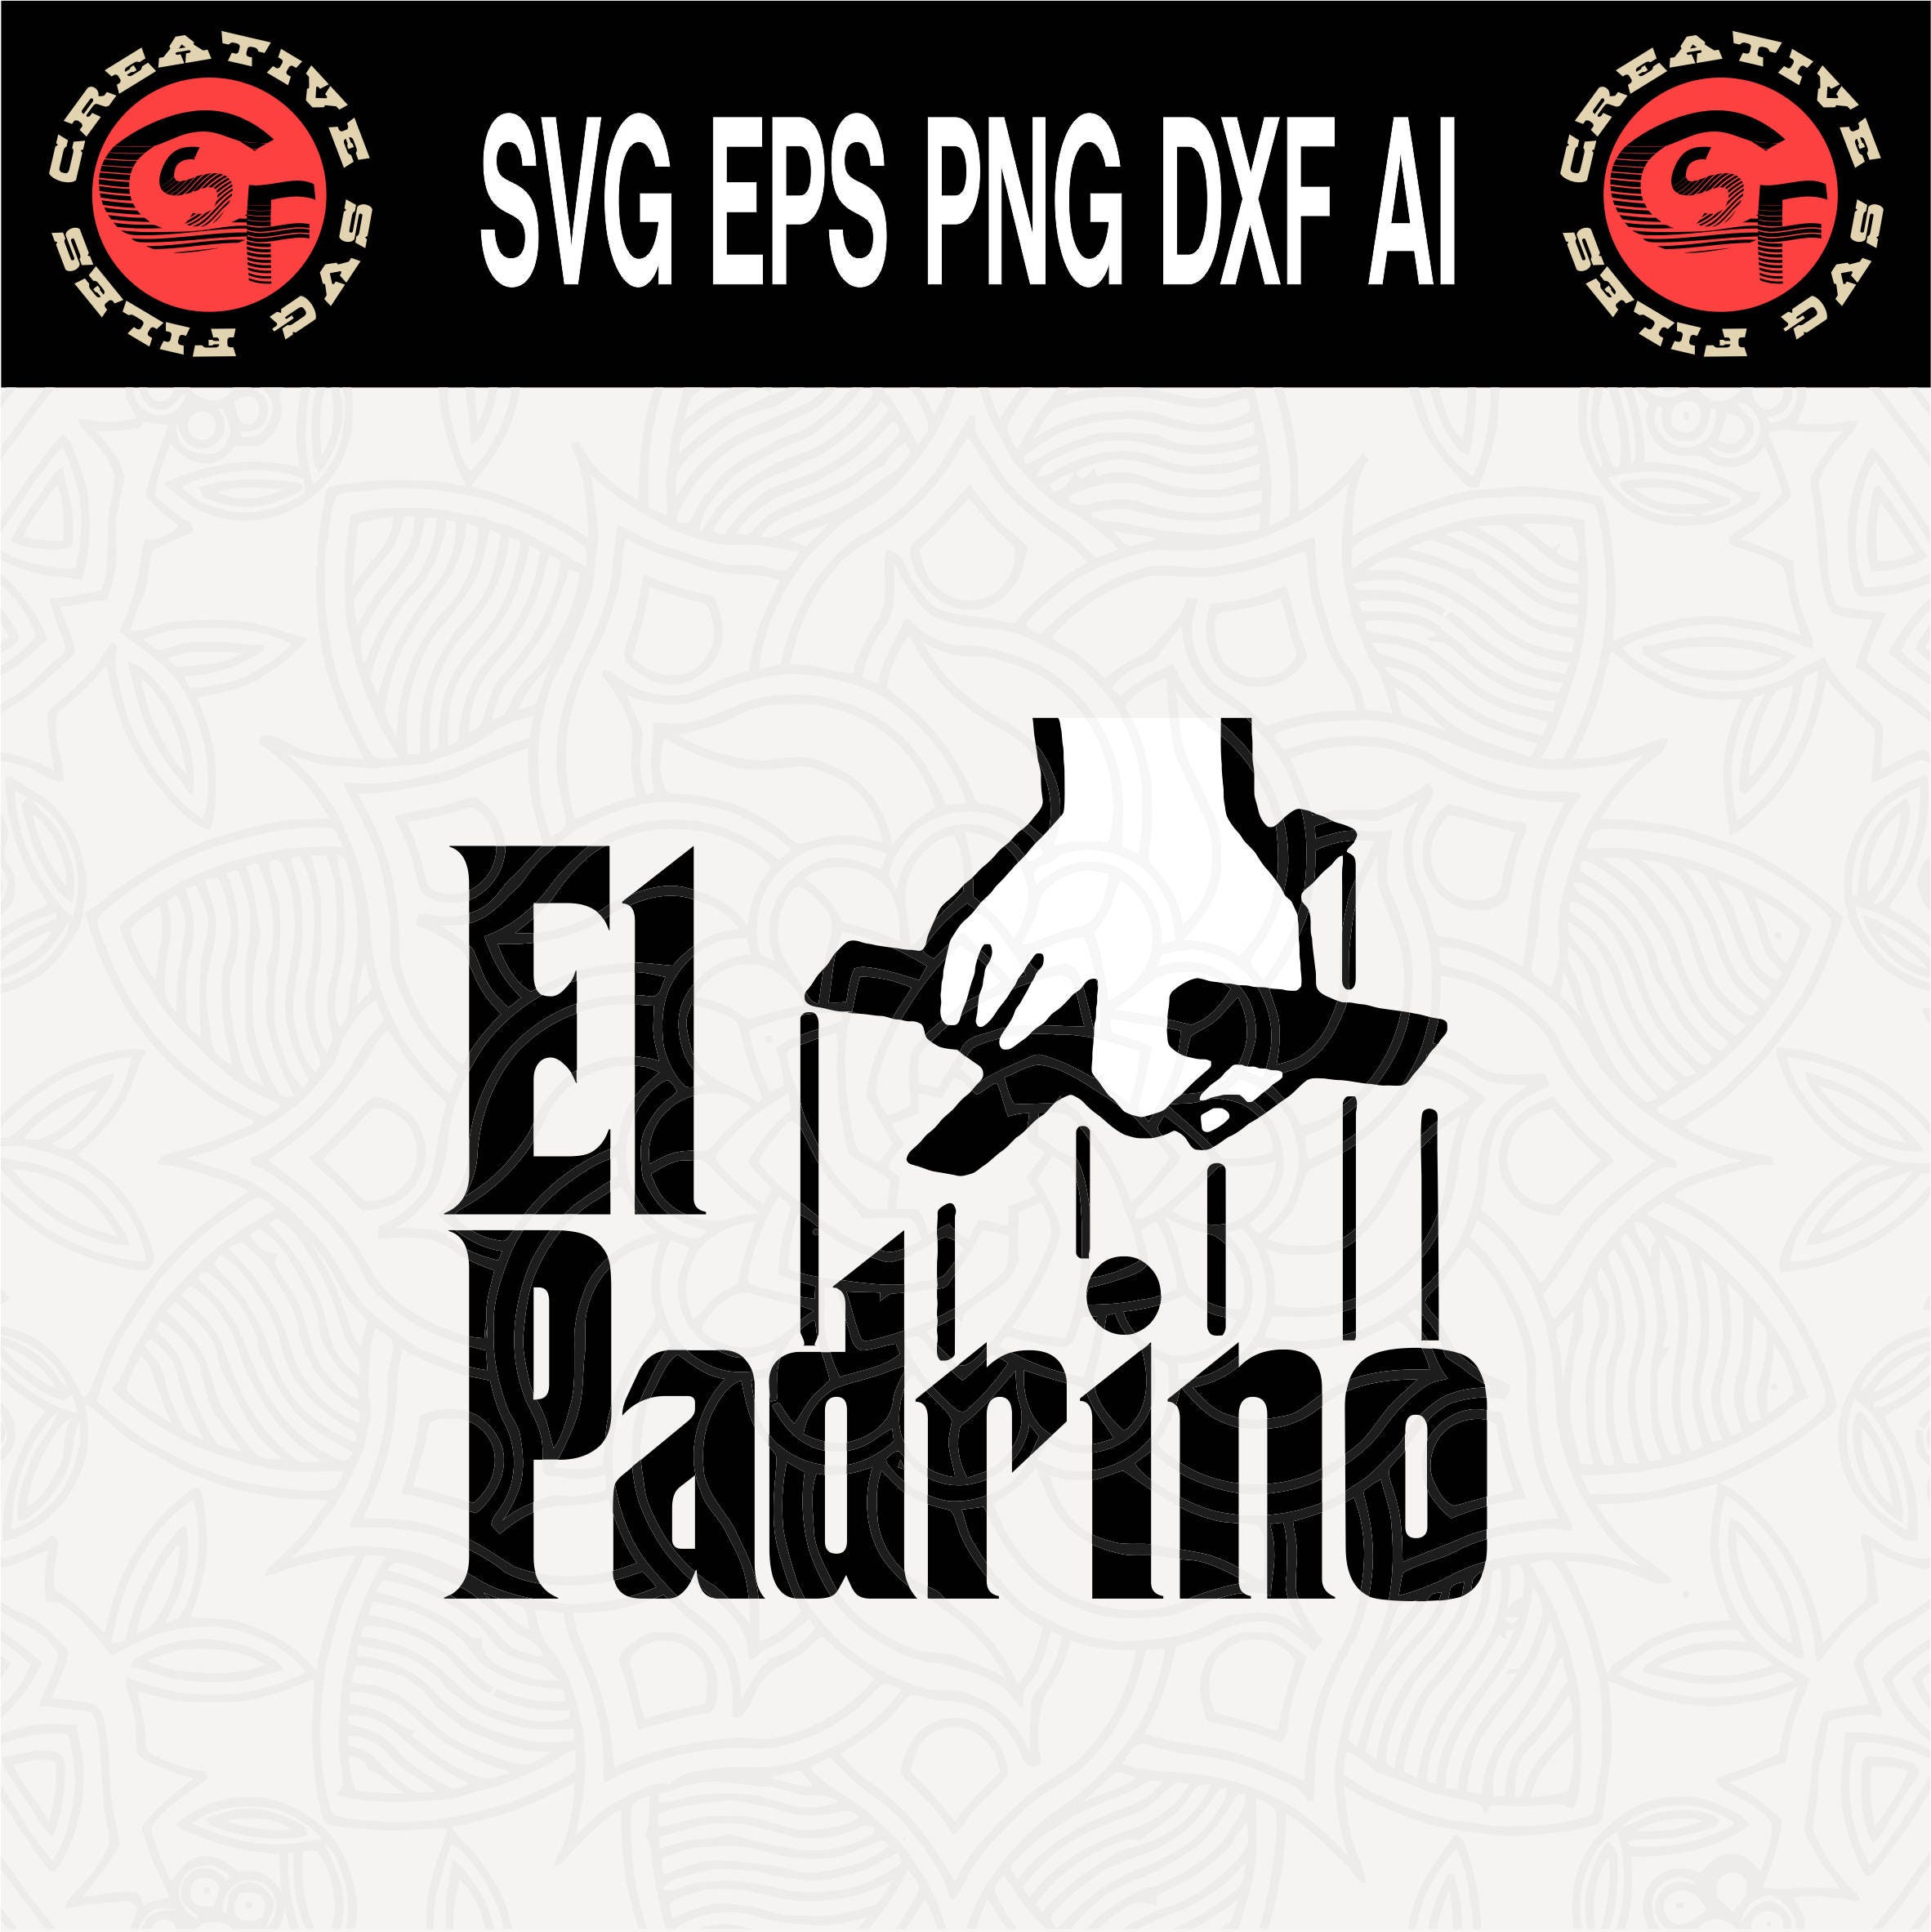 Download El Padrino Logo svgGodfather svgFiles for